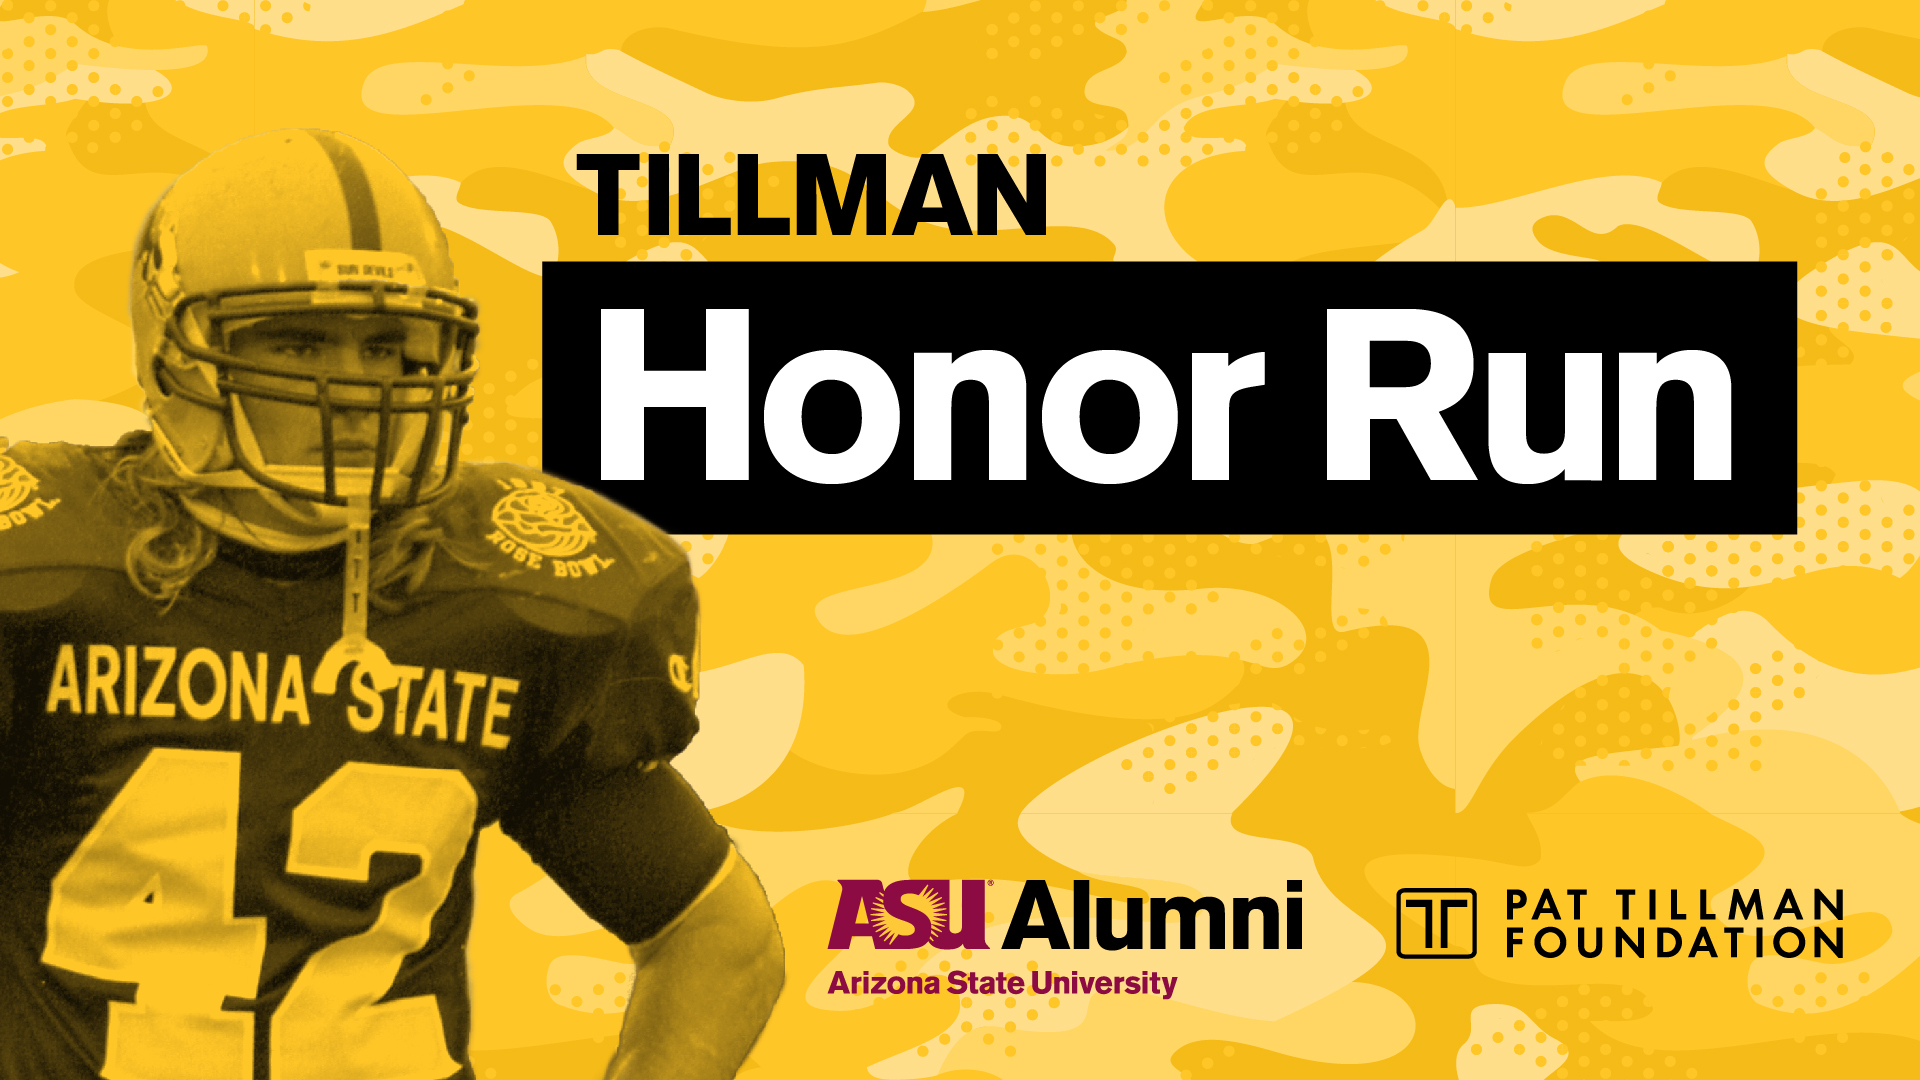 Tillman Honor Run in Tucson